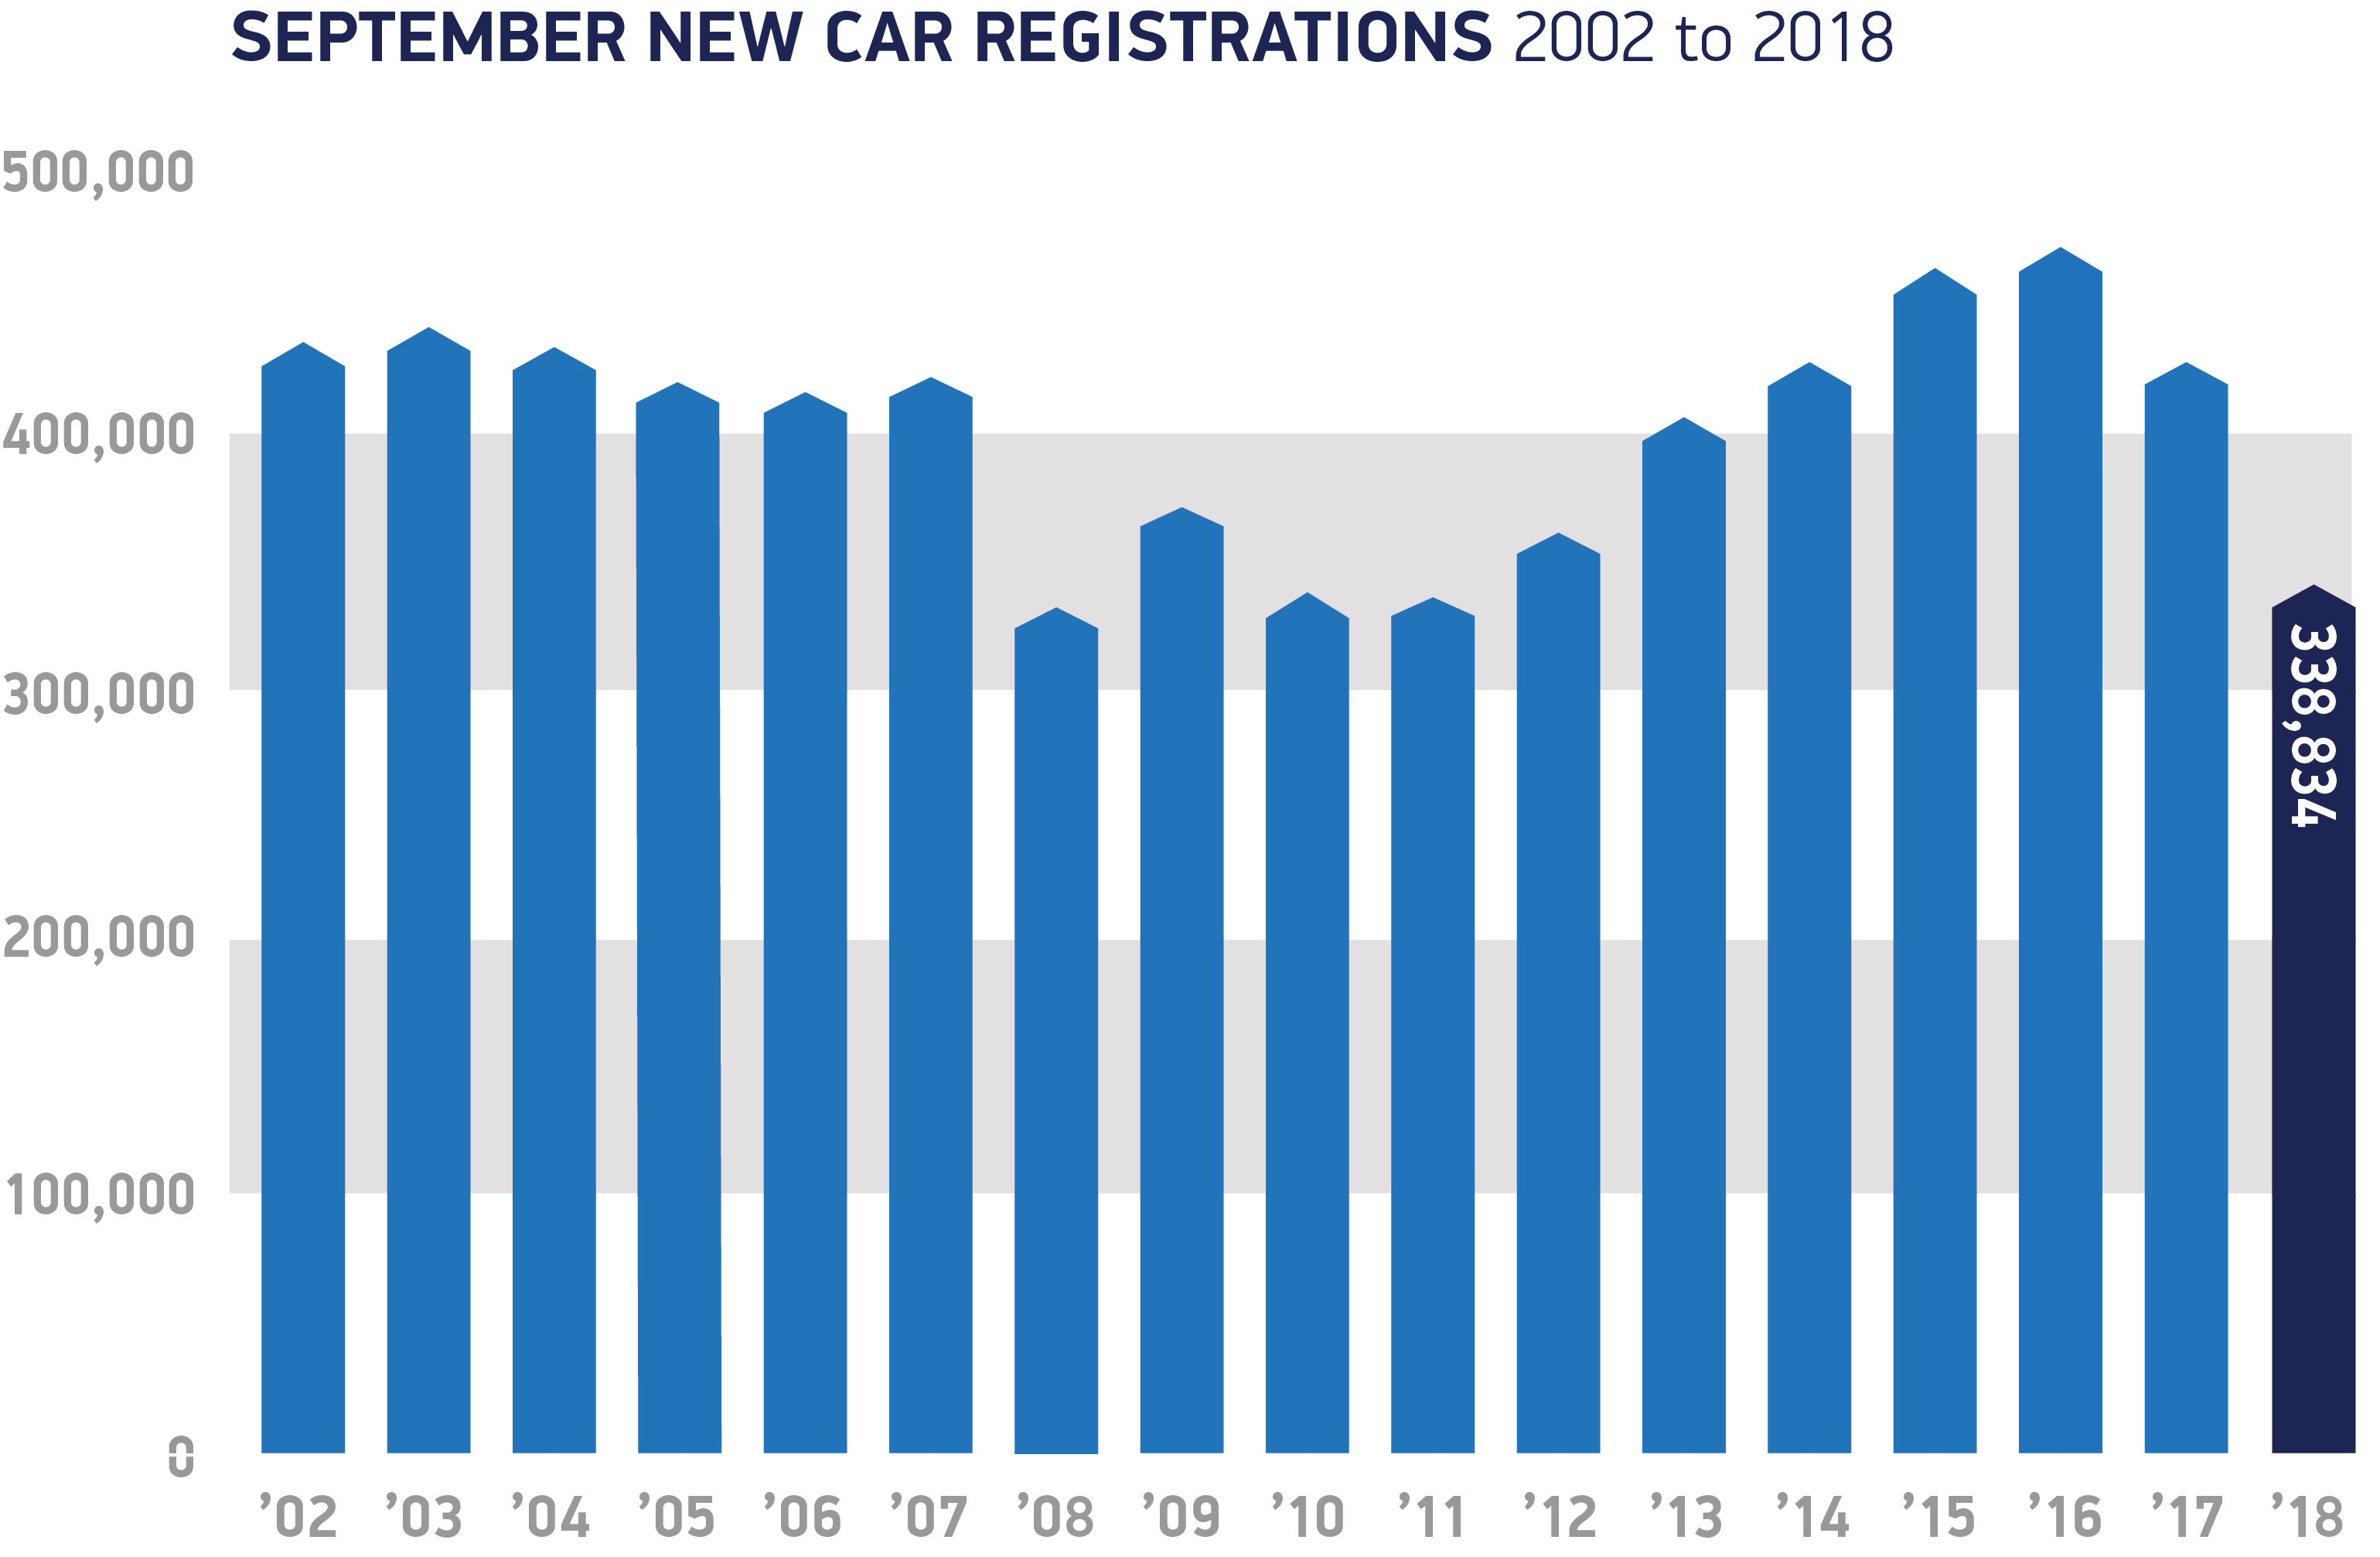 September registrations 2002 to 2018